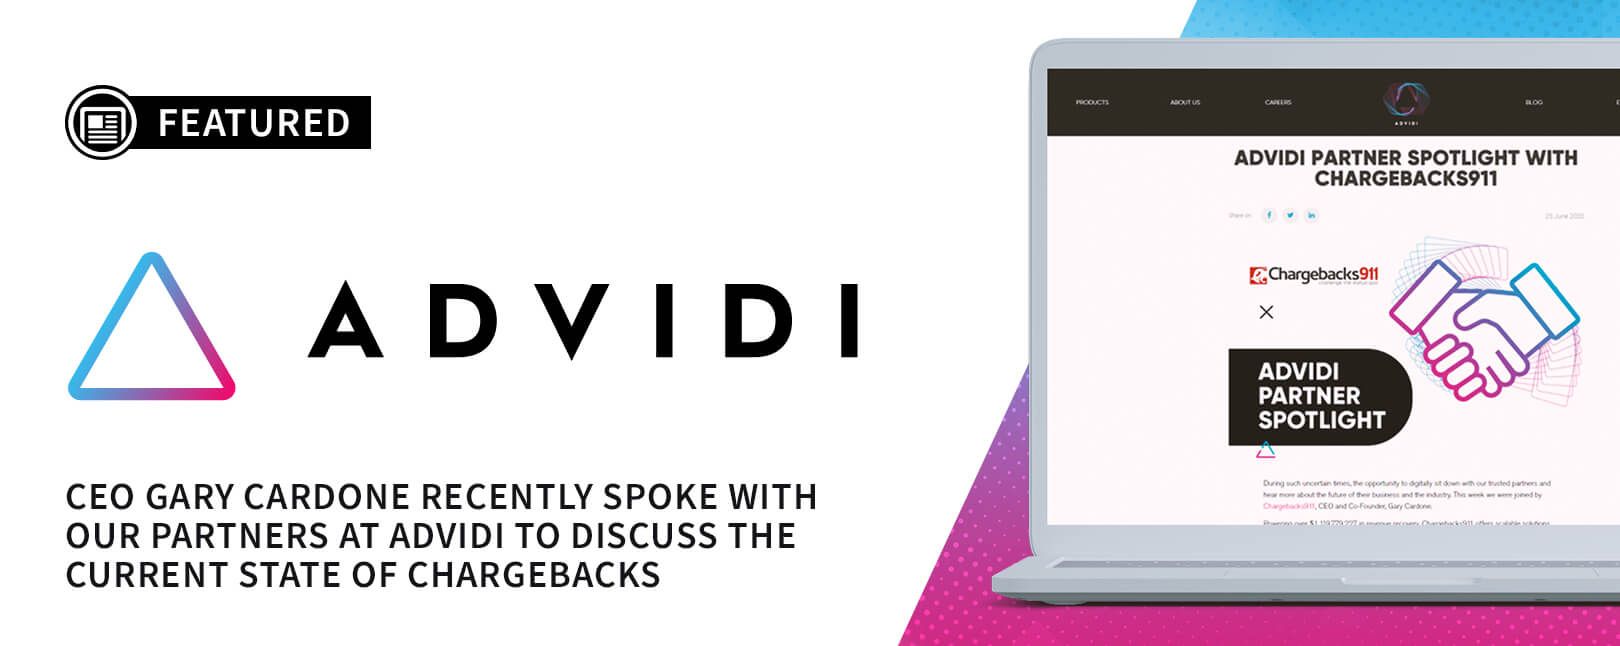 Advidi Partner Spotlight Featuring Gary Cardone of Chargebacks911®